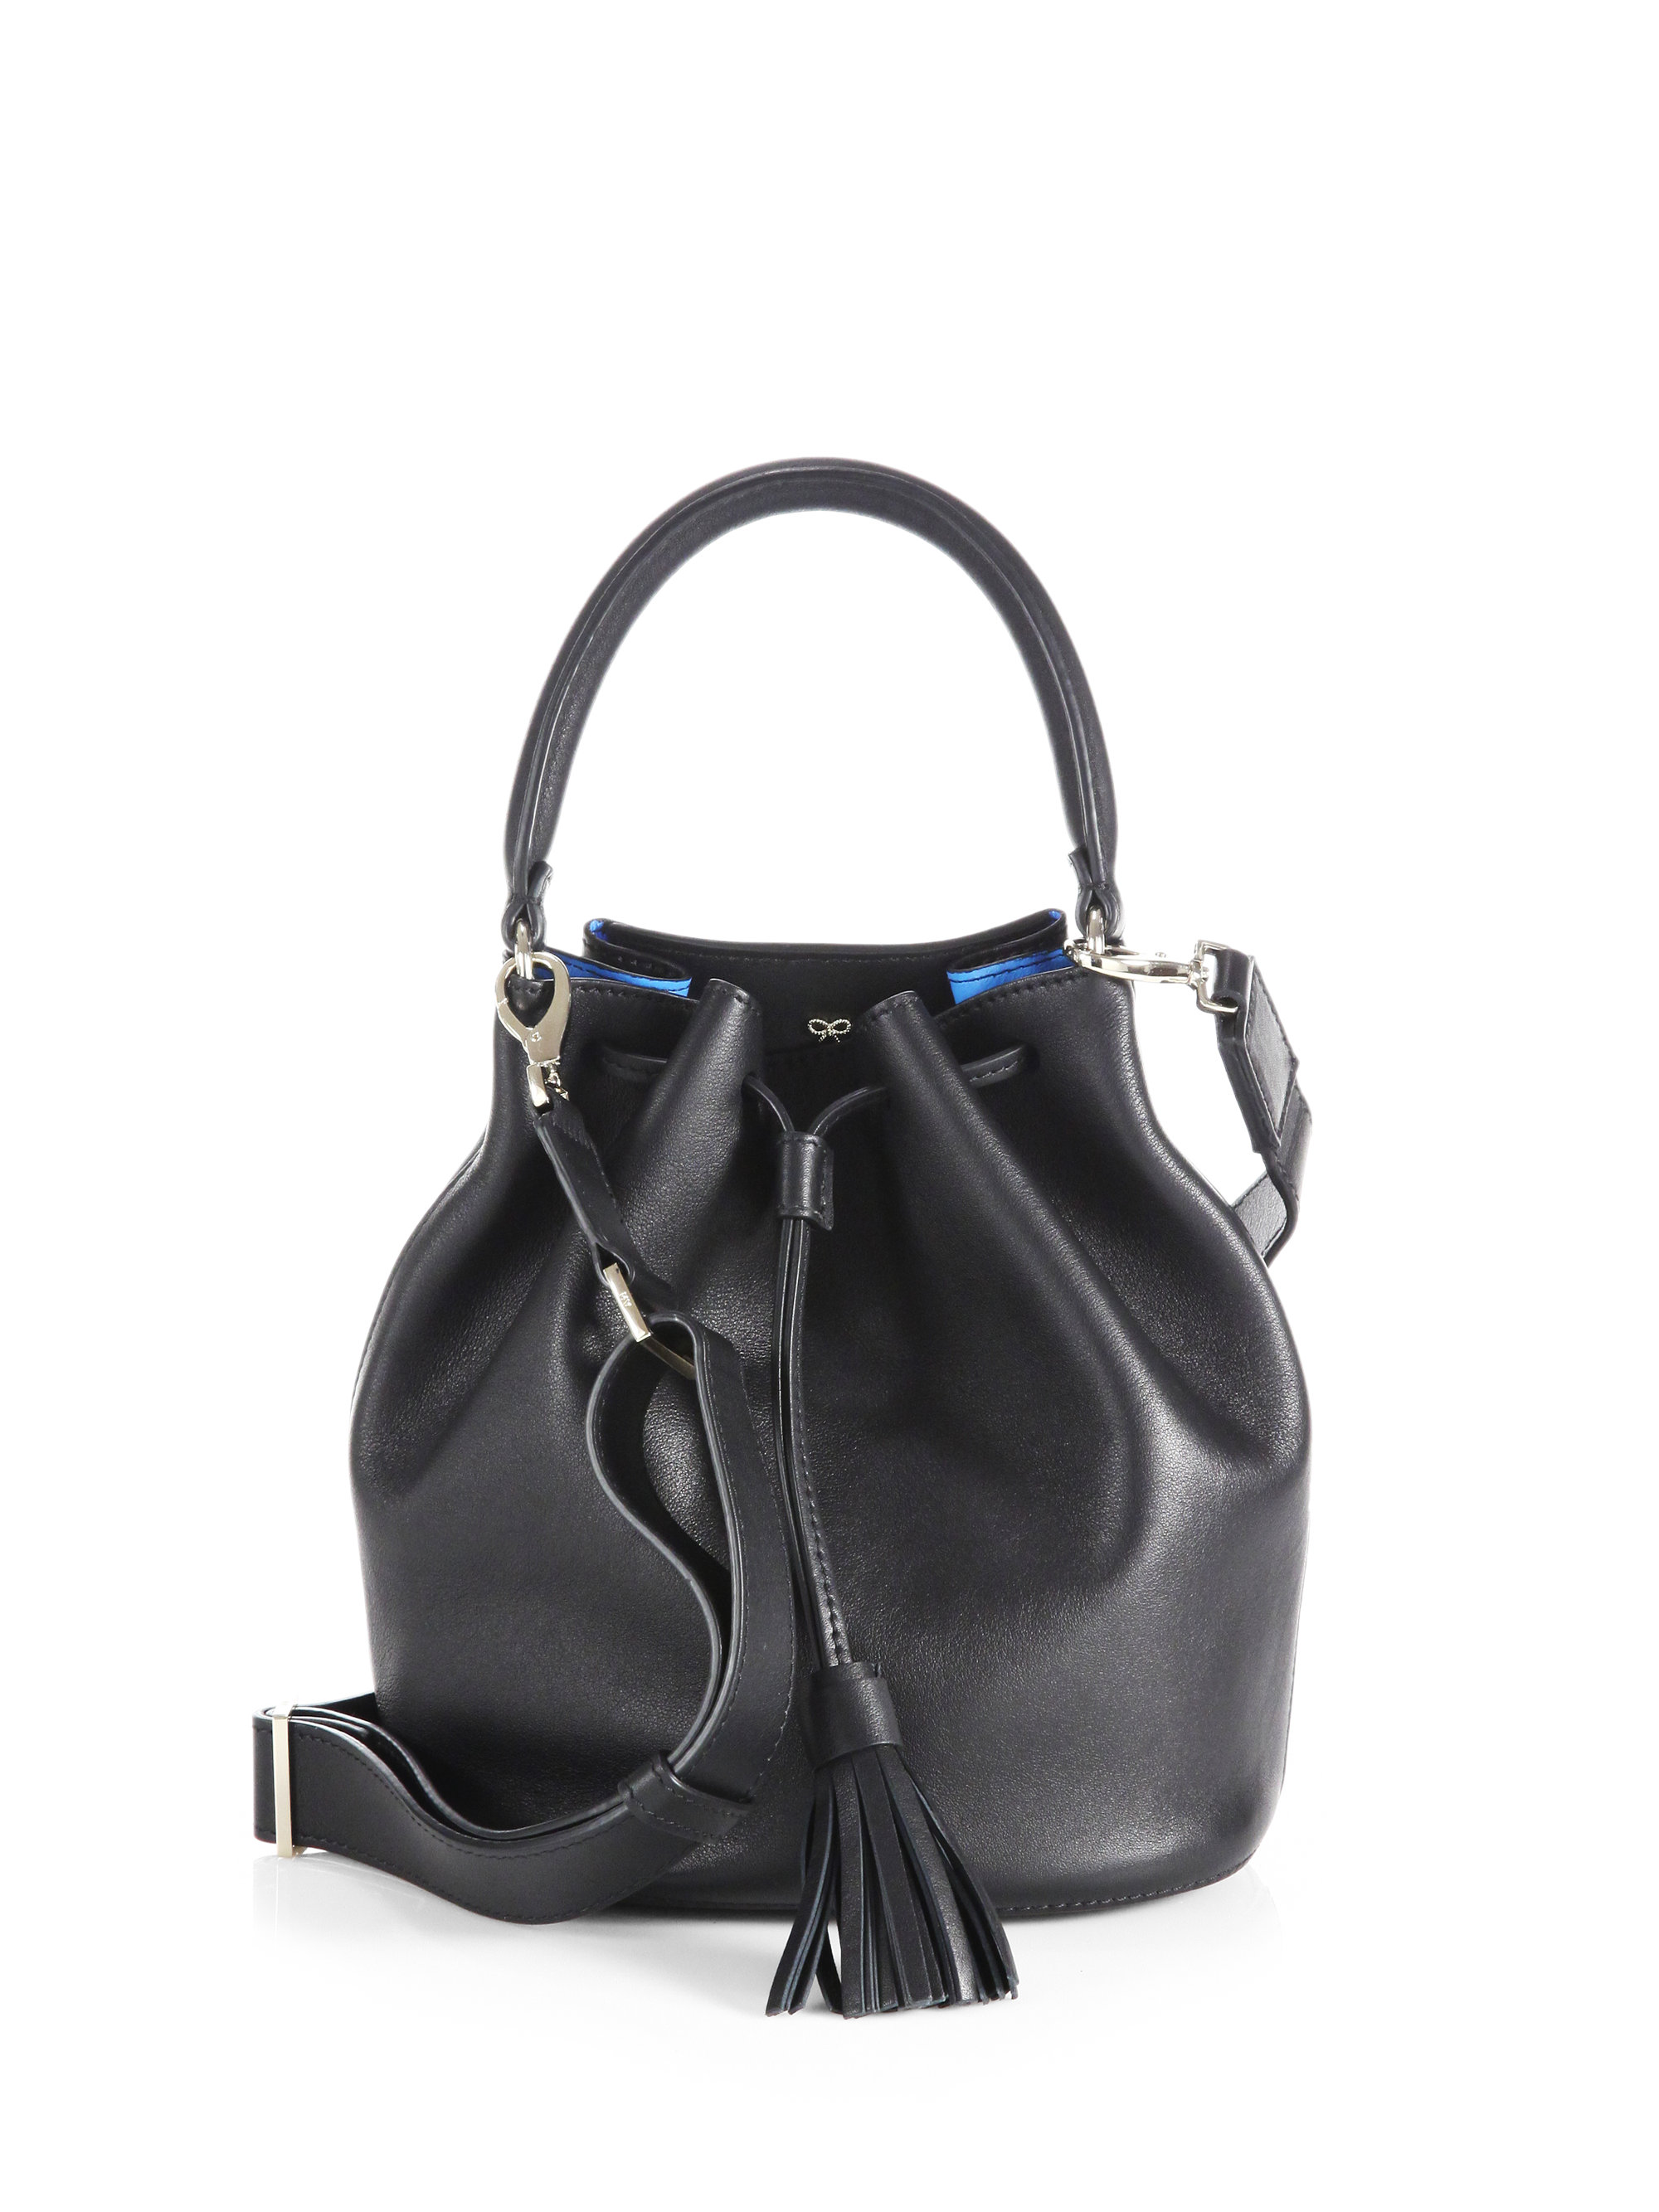 Anya Hindmarch Crossbody Leather Bucket Bag in Black | Lyst